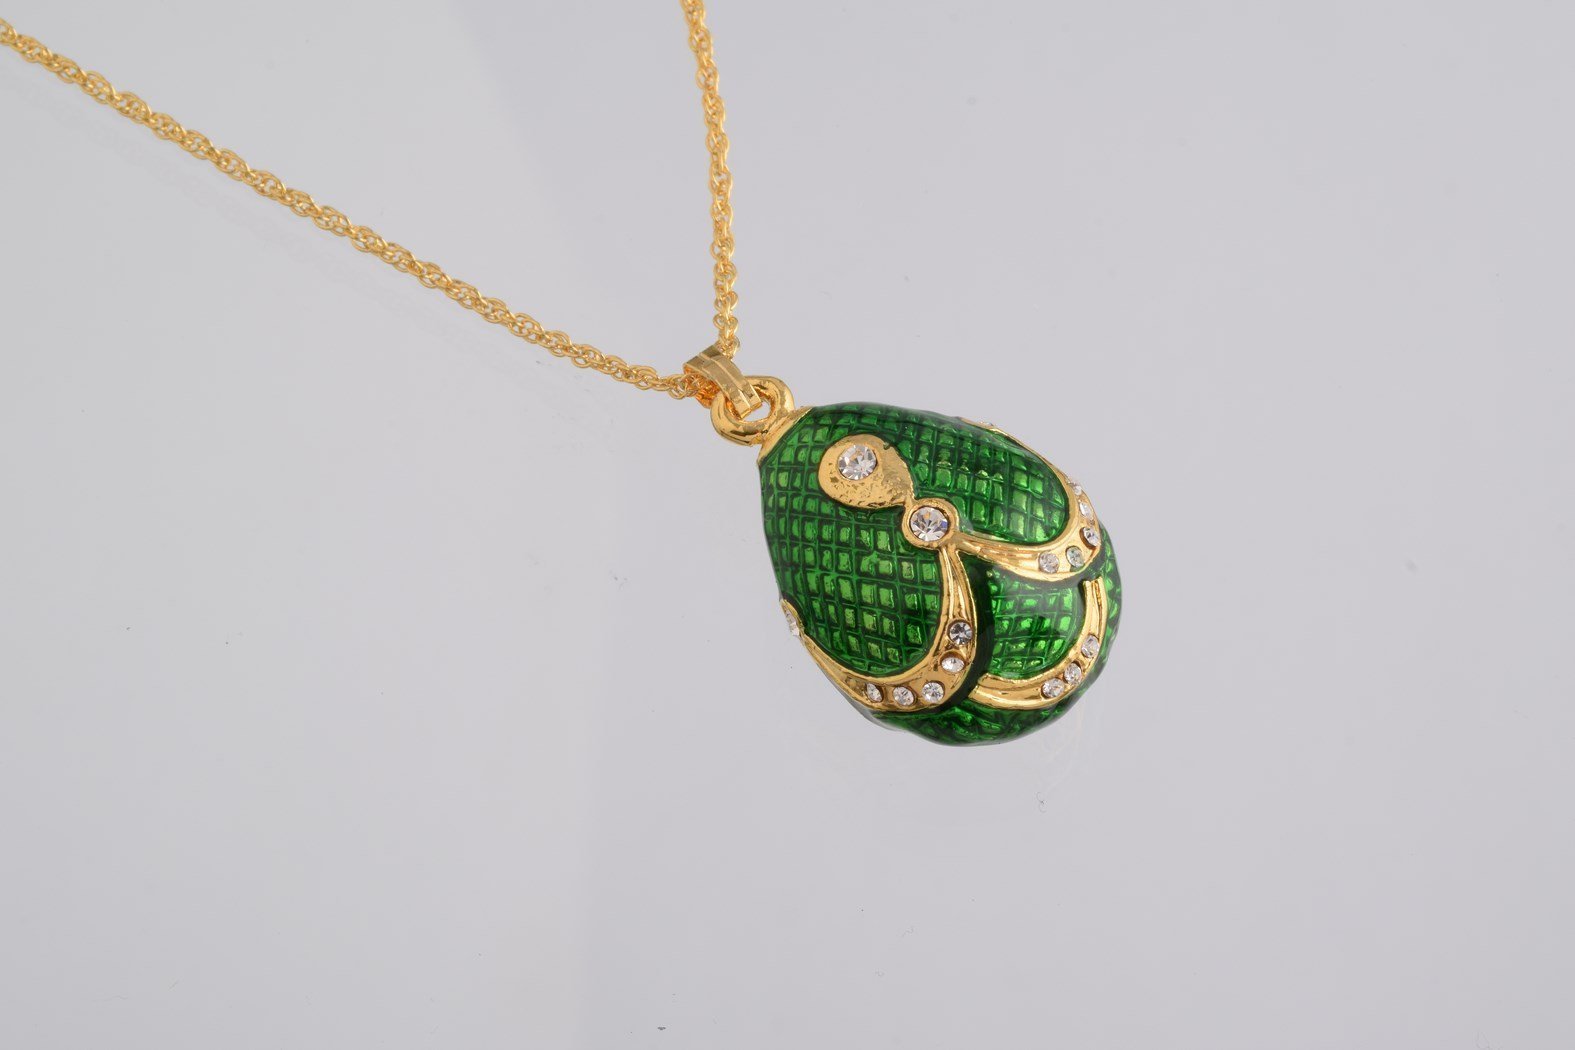 Keren Kopal Green & Gold Egg Pendant Necklace  39.00